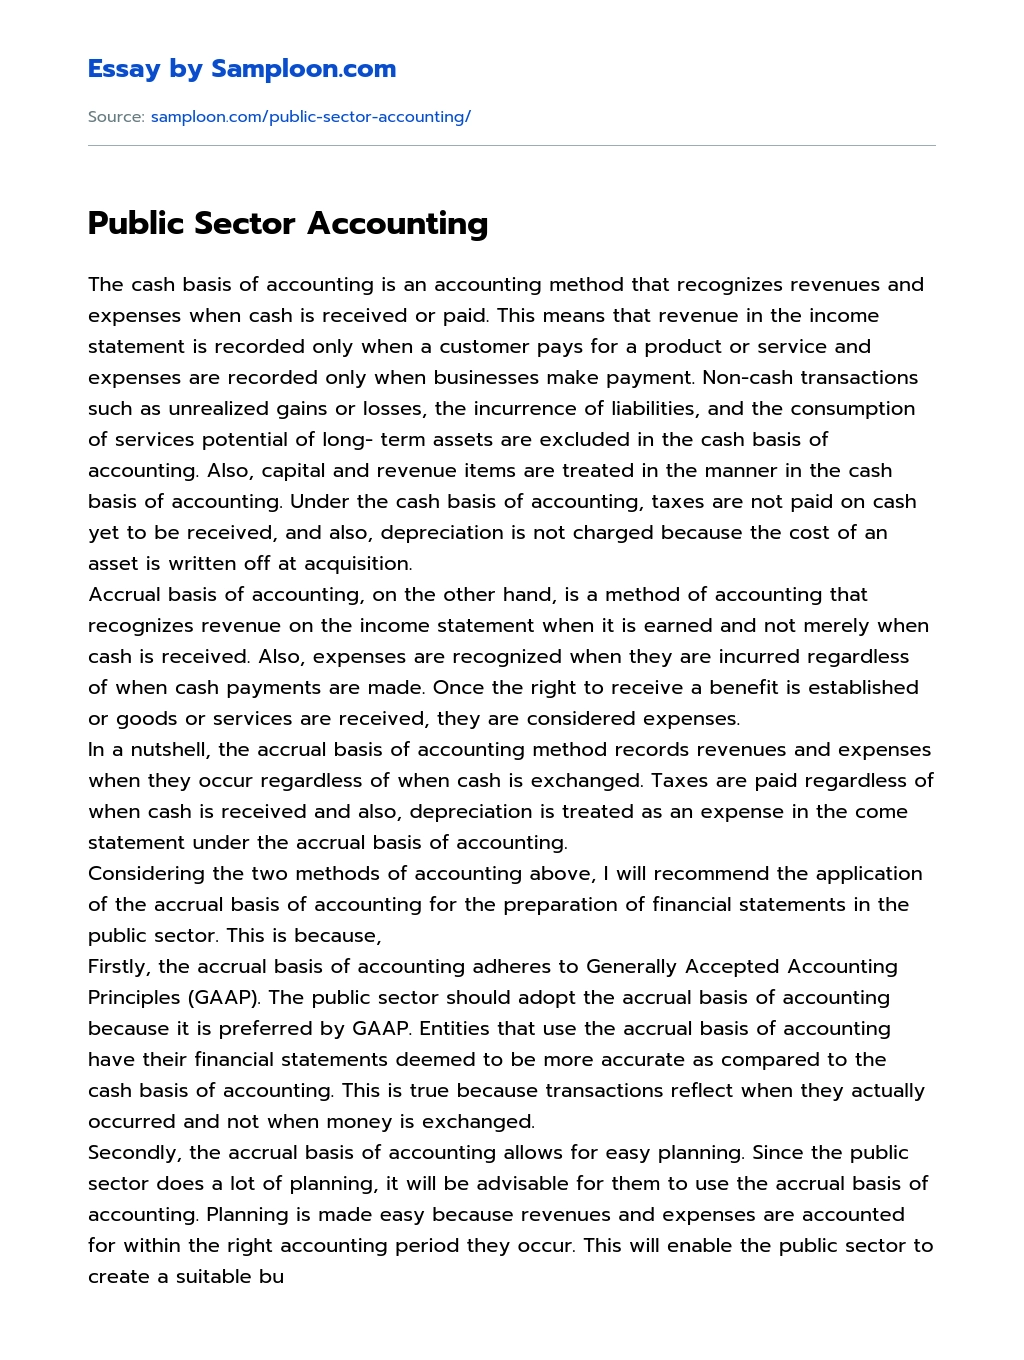 Public Sector Accounting essay